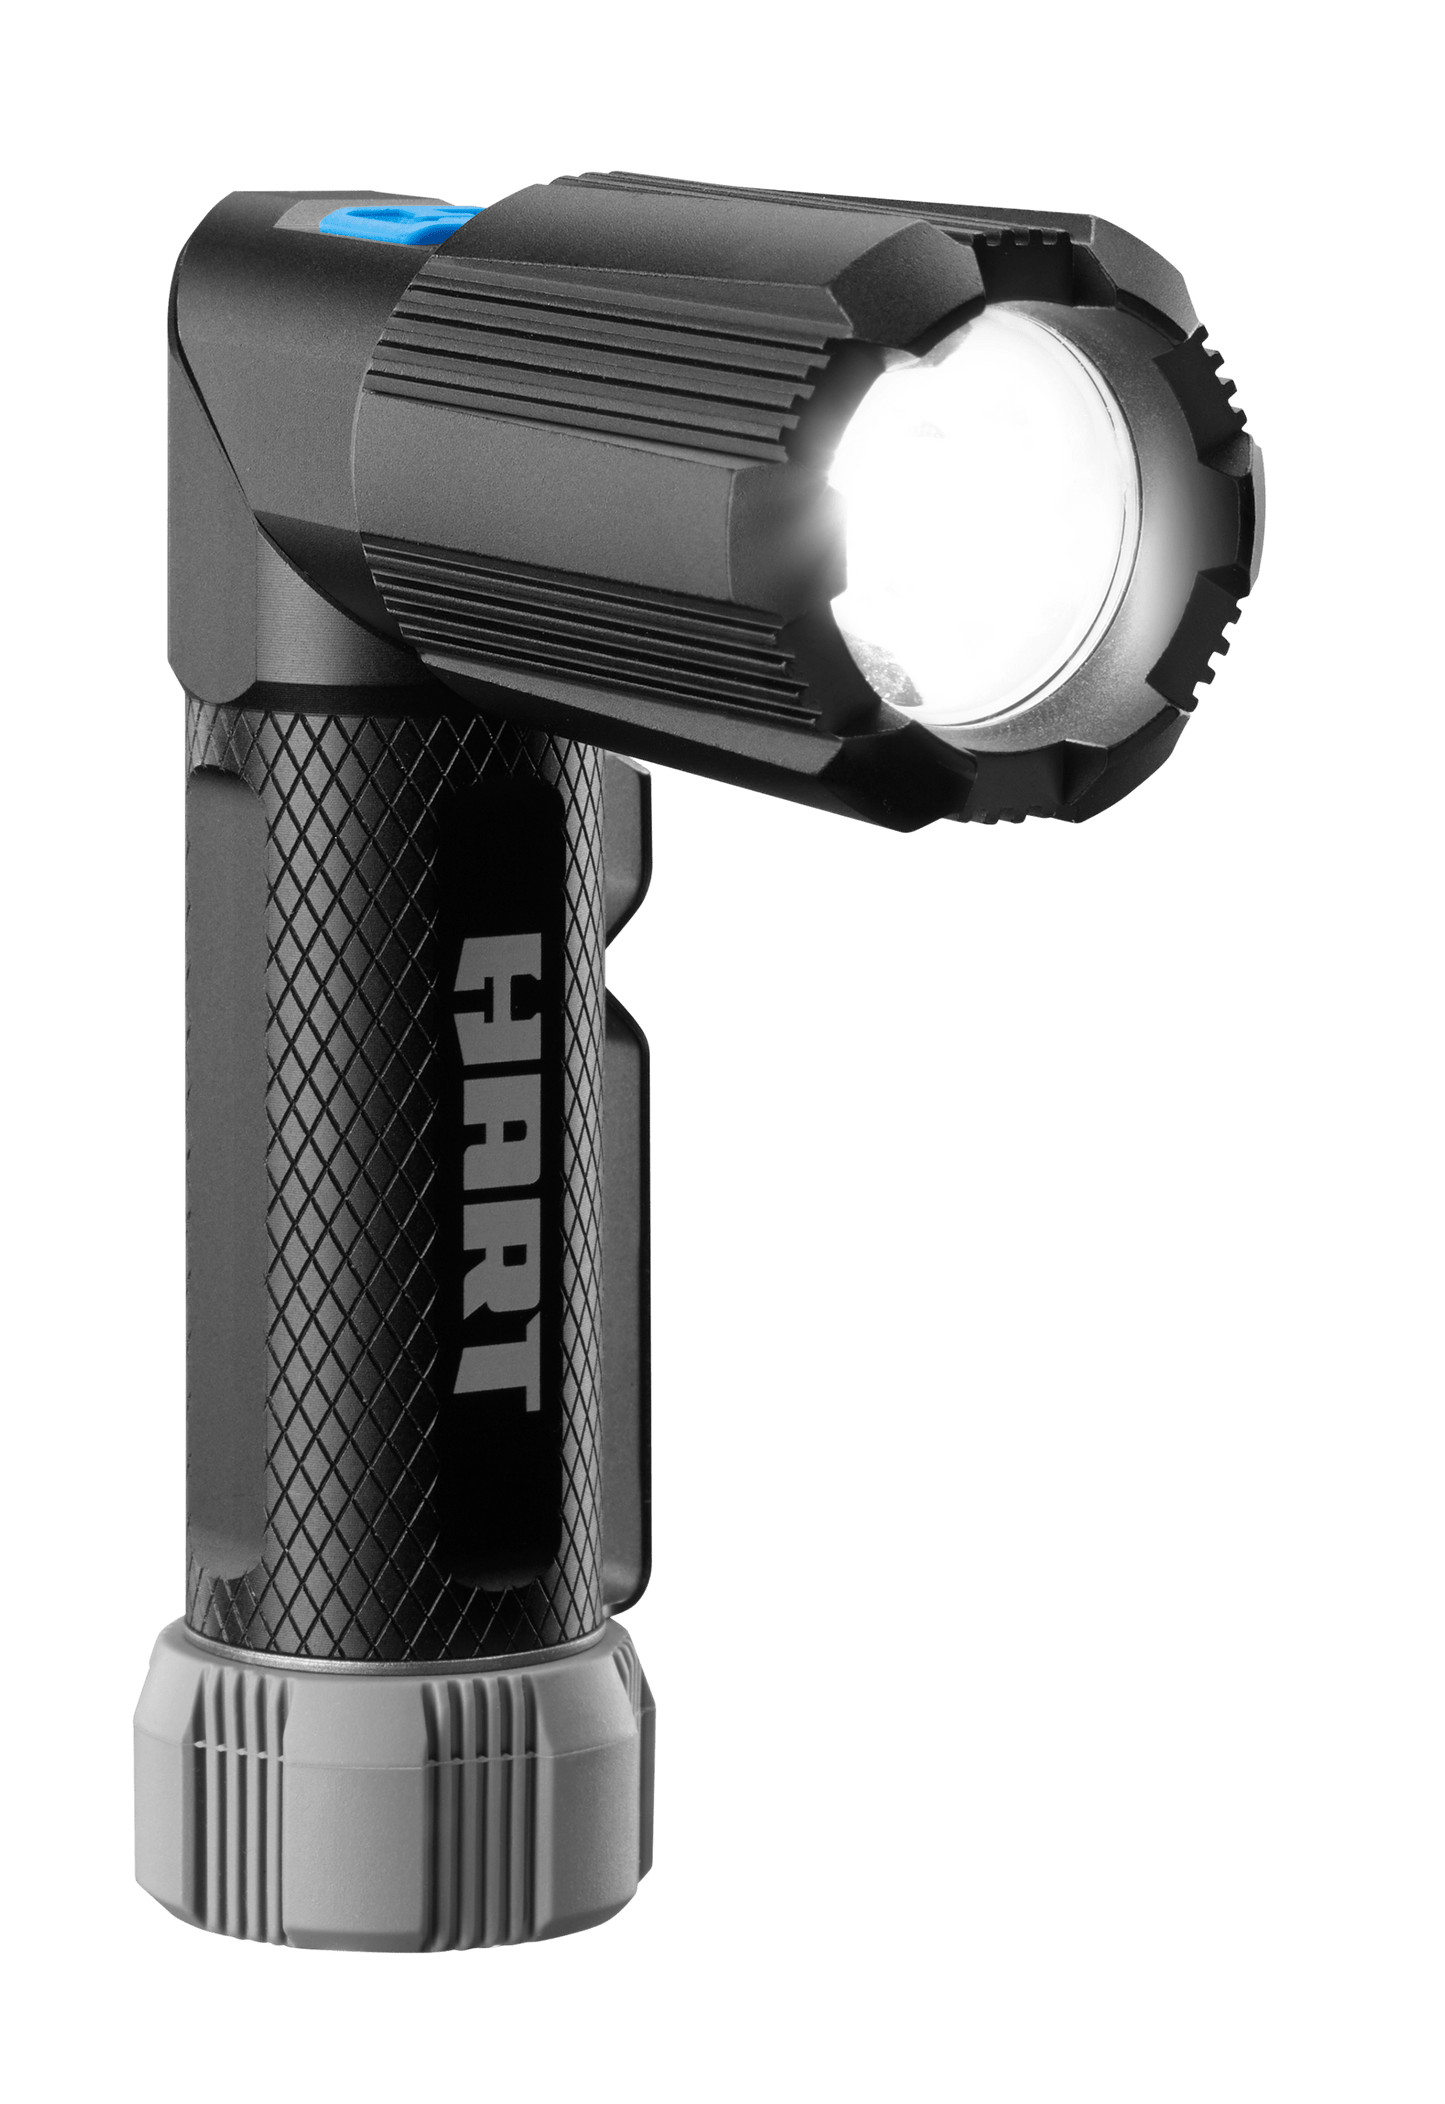 LED 500 Lumens Flashlight